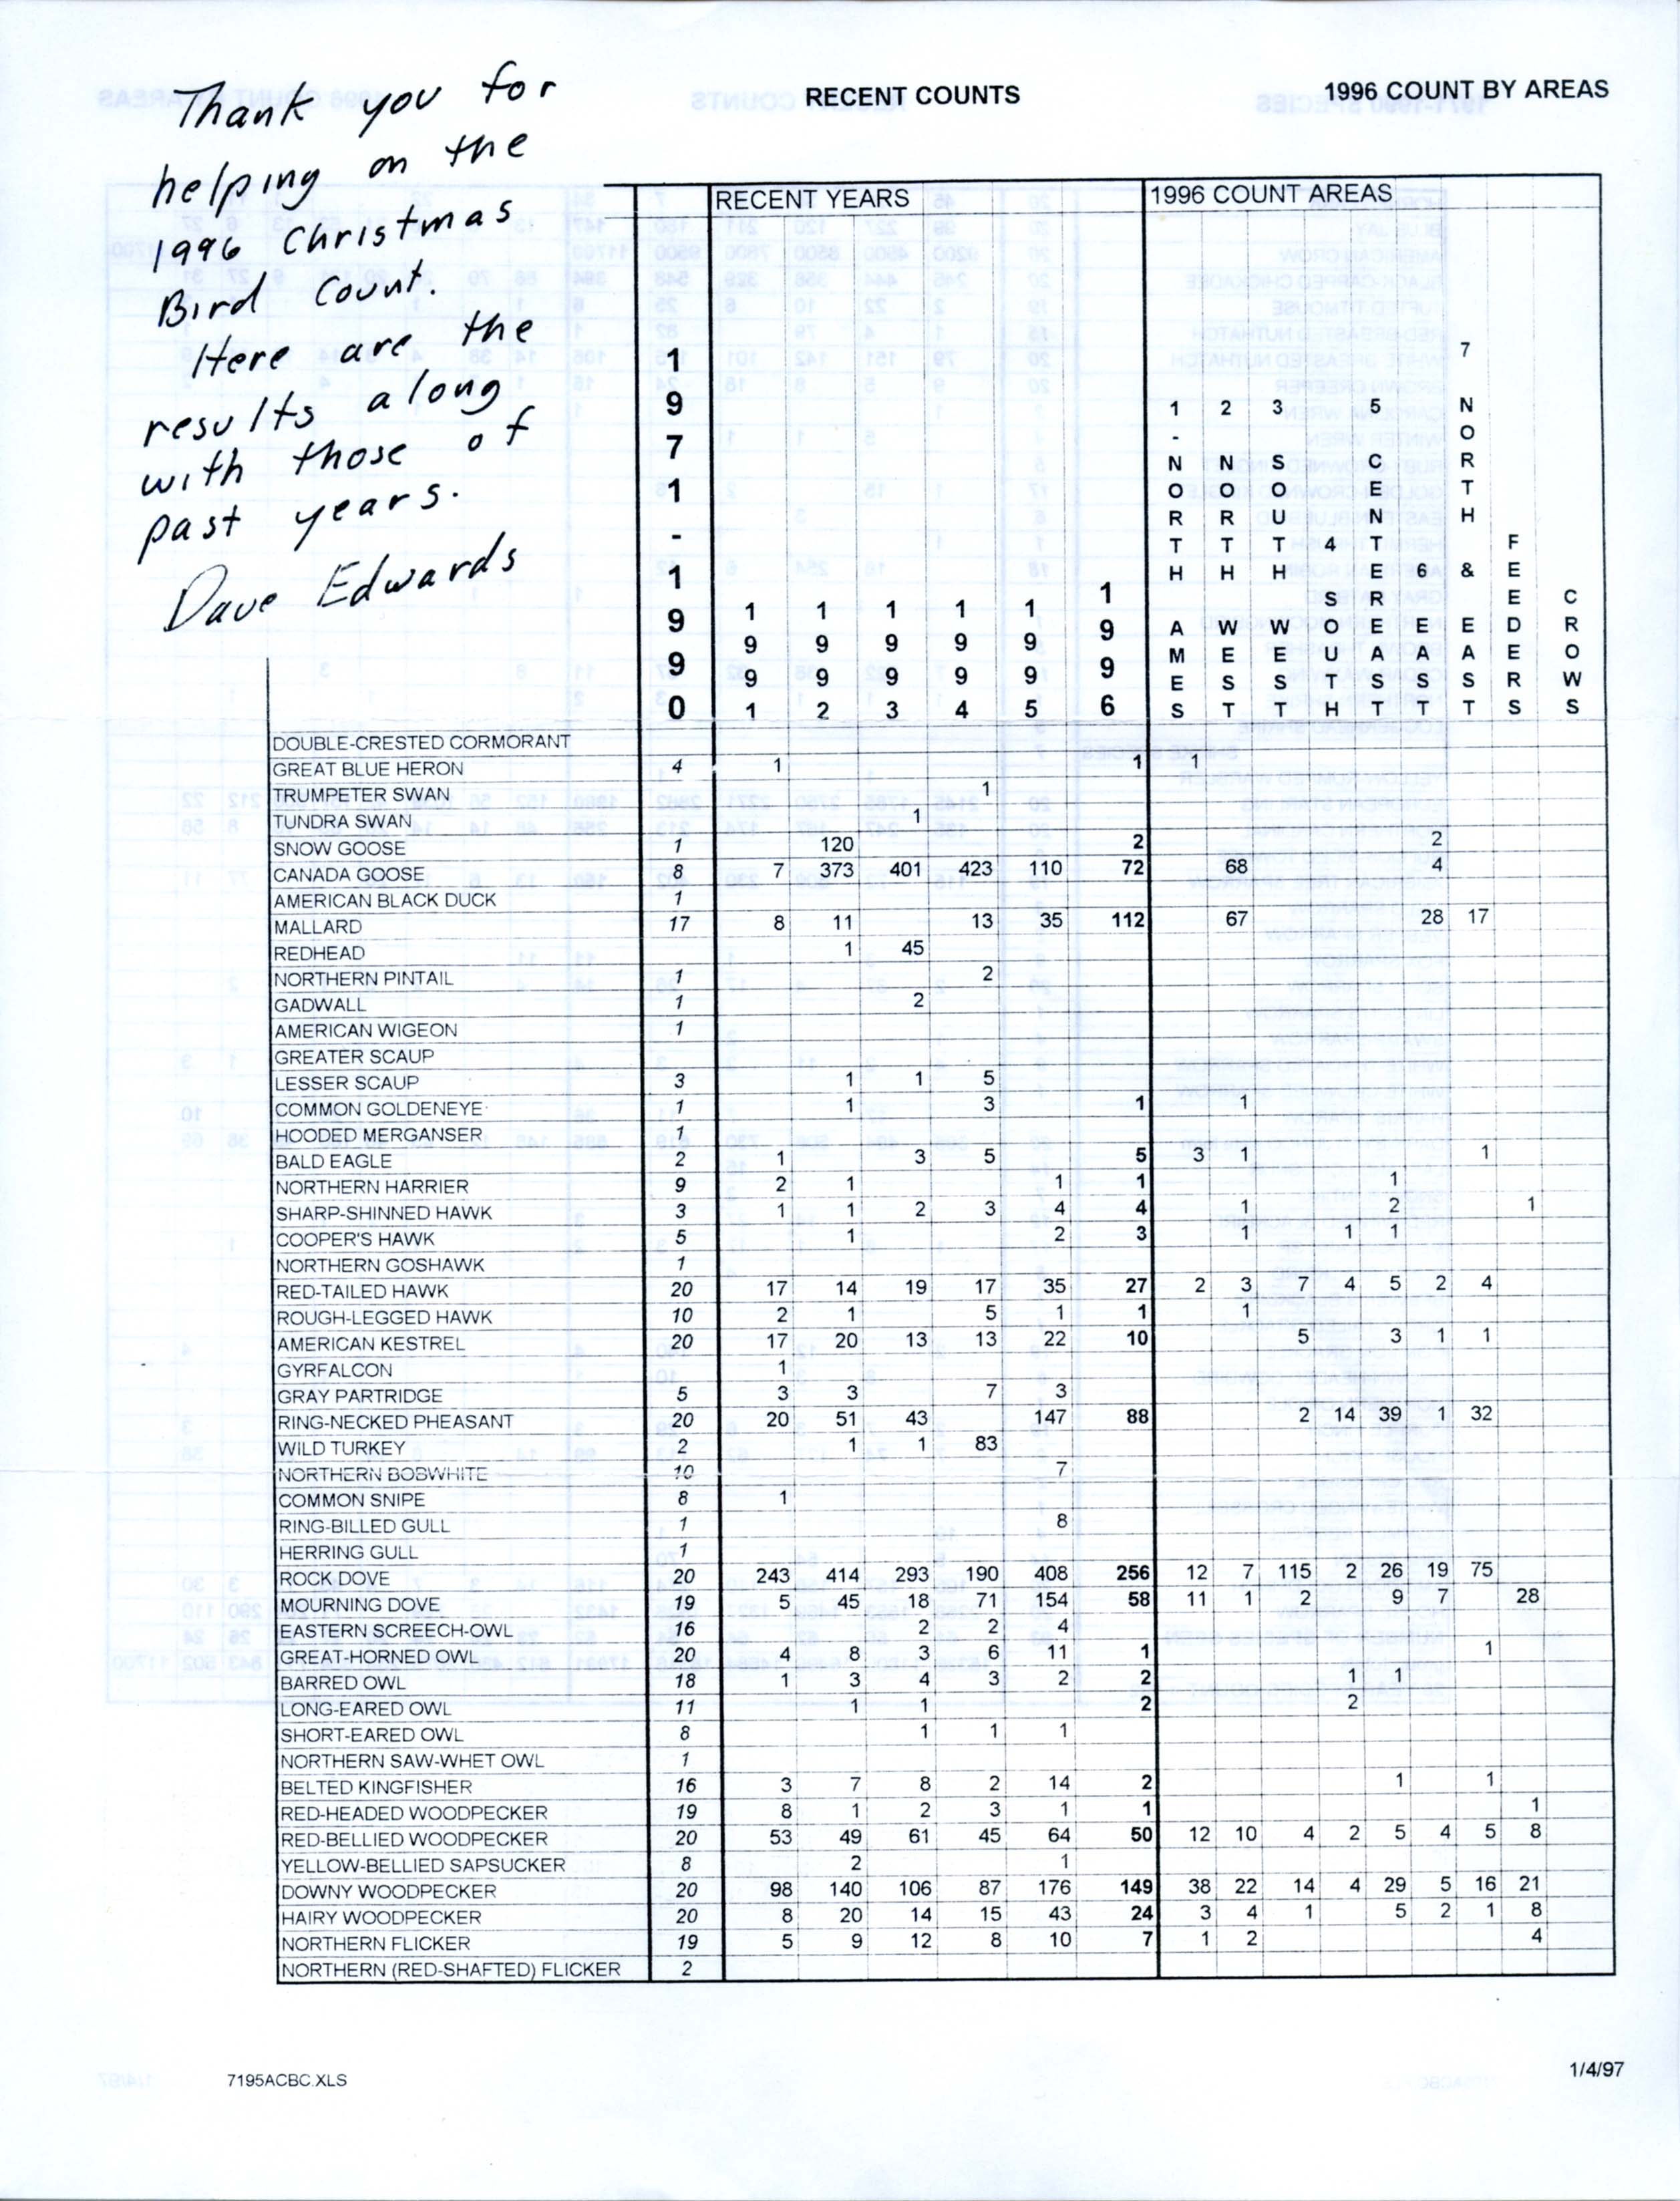 Ames Christmas Bird Count data table, 1971-1996